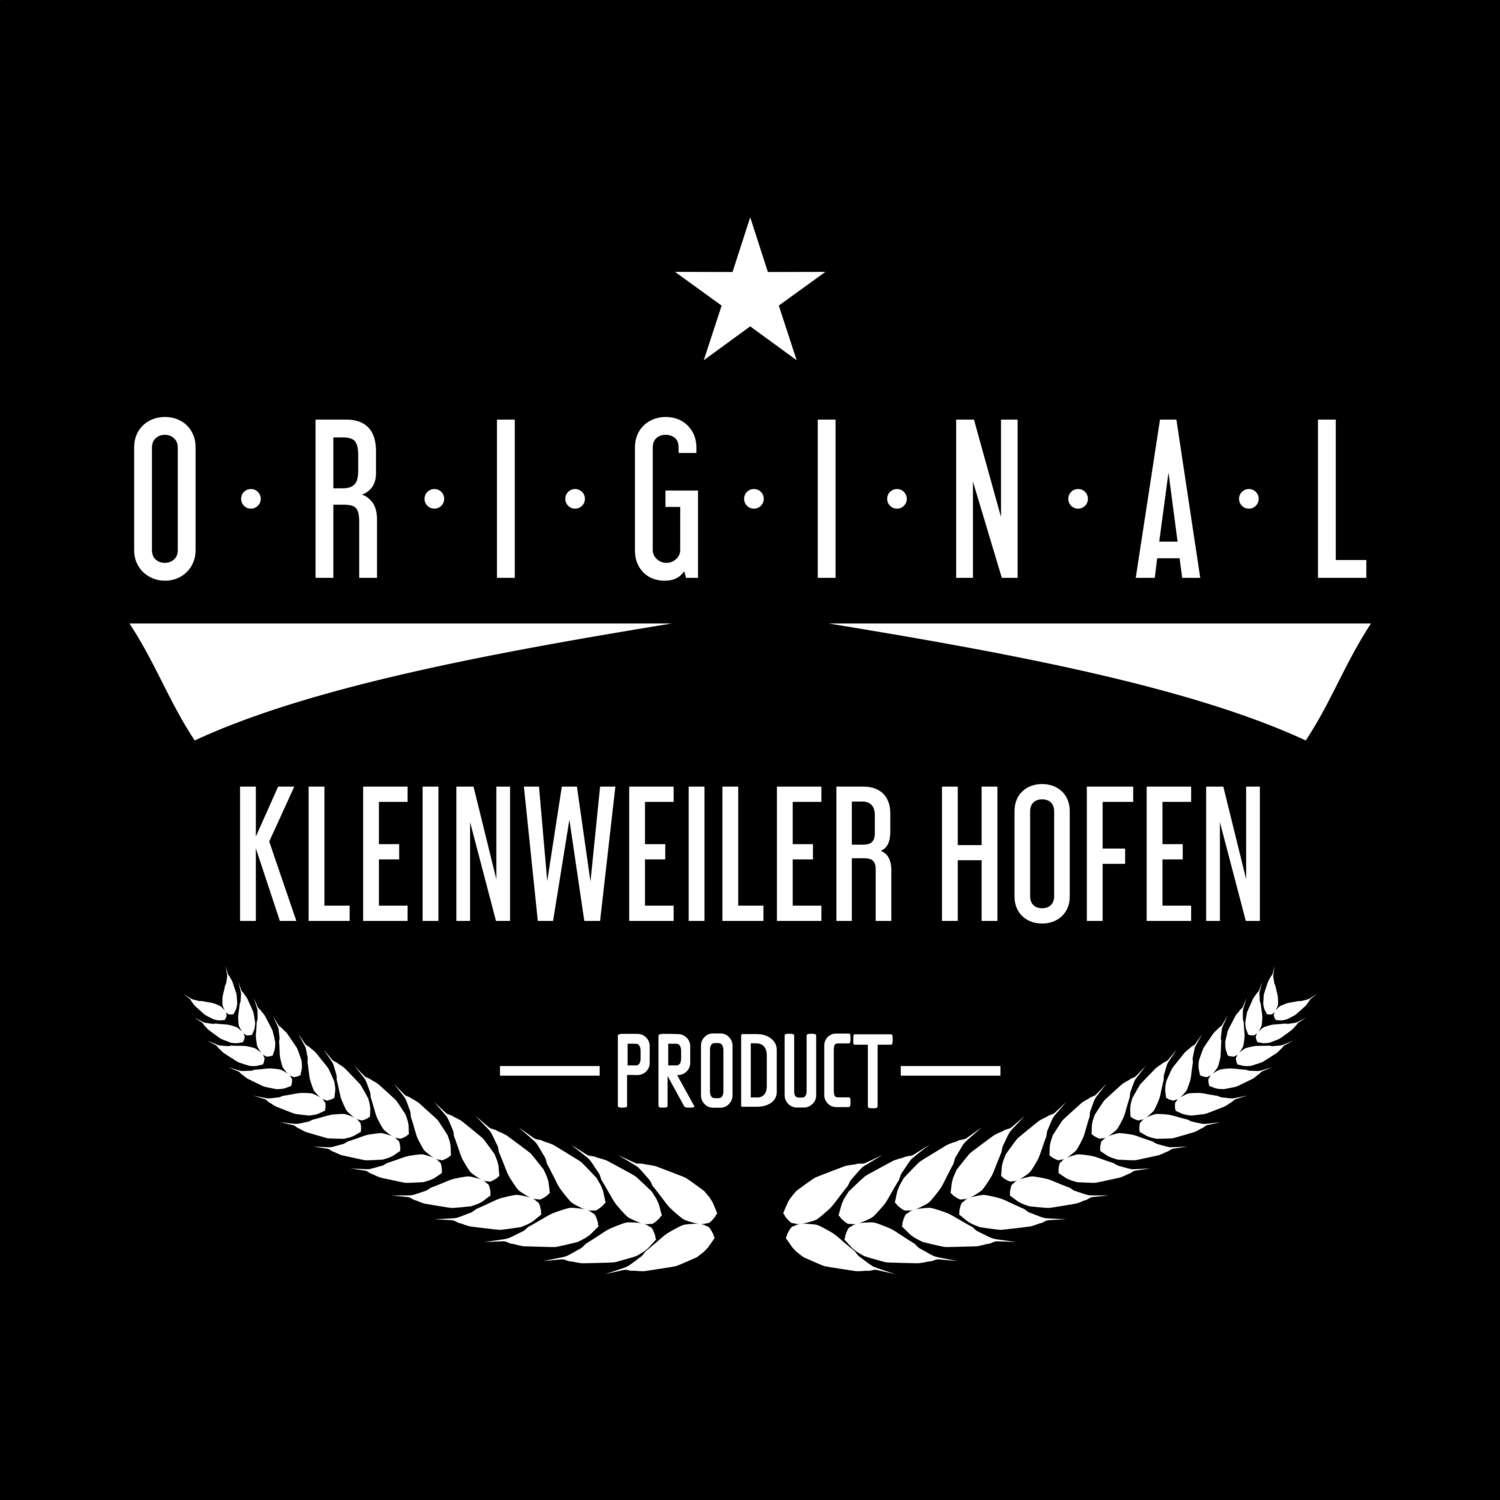 Kleinweiler Hofen T-Shirt »Original Product«